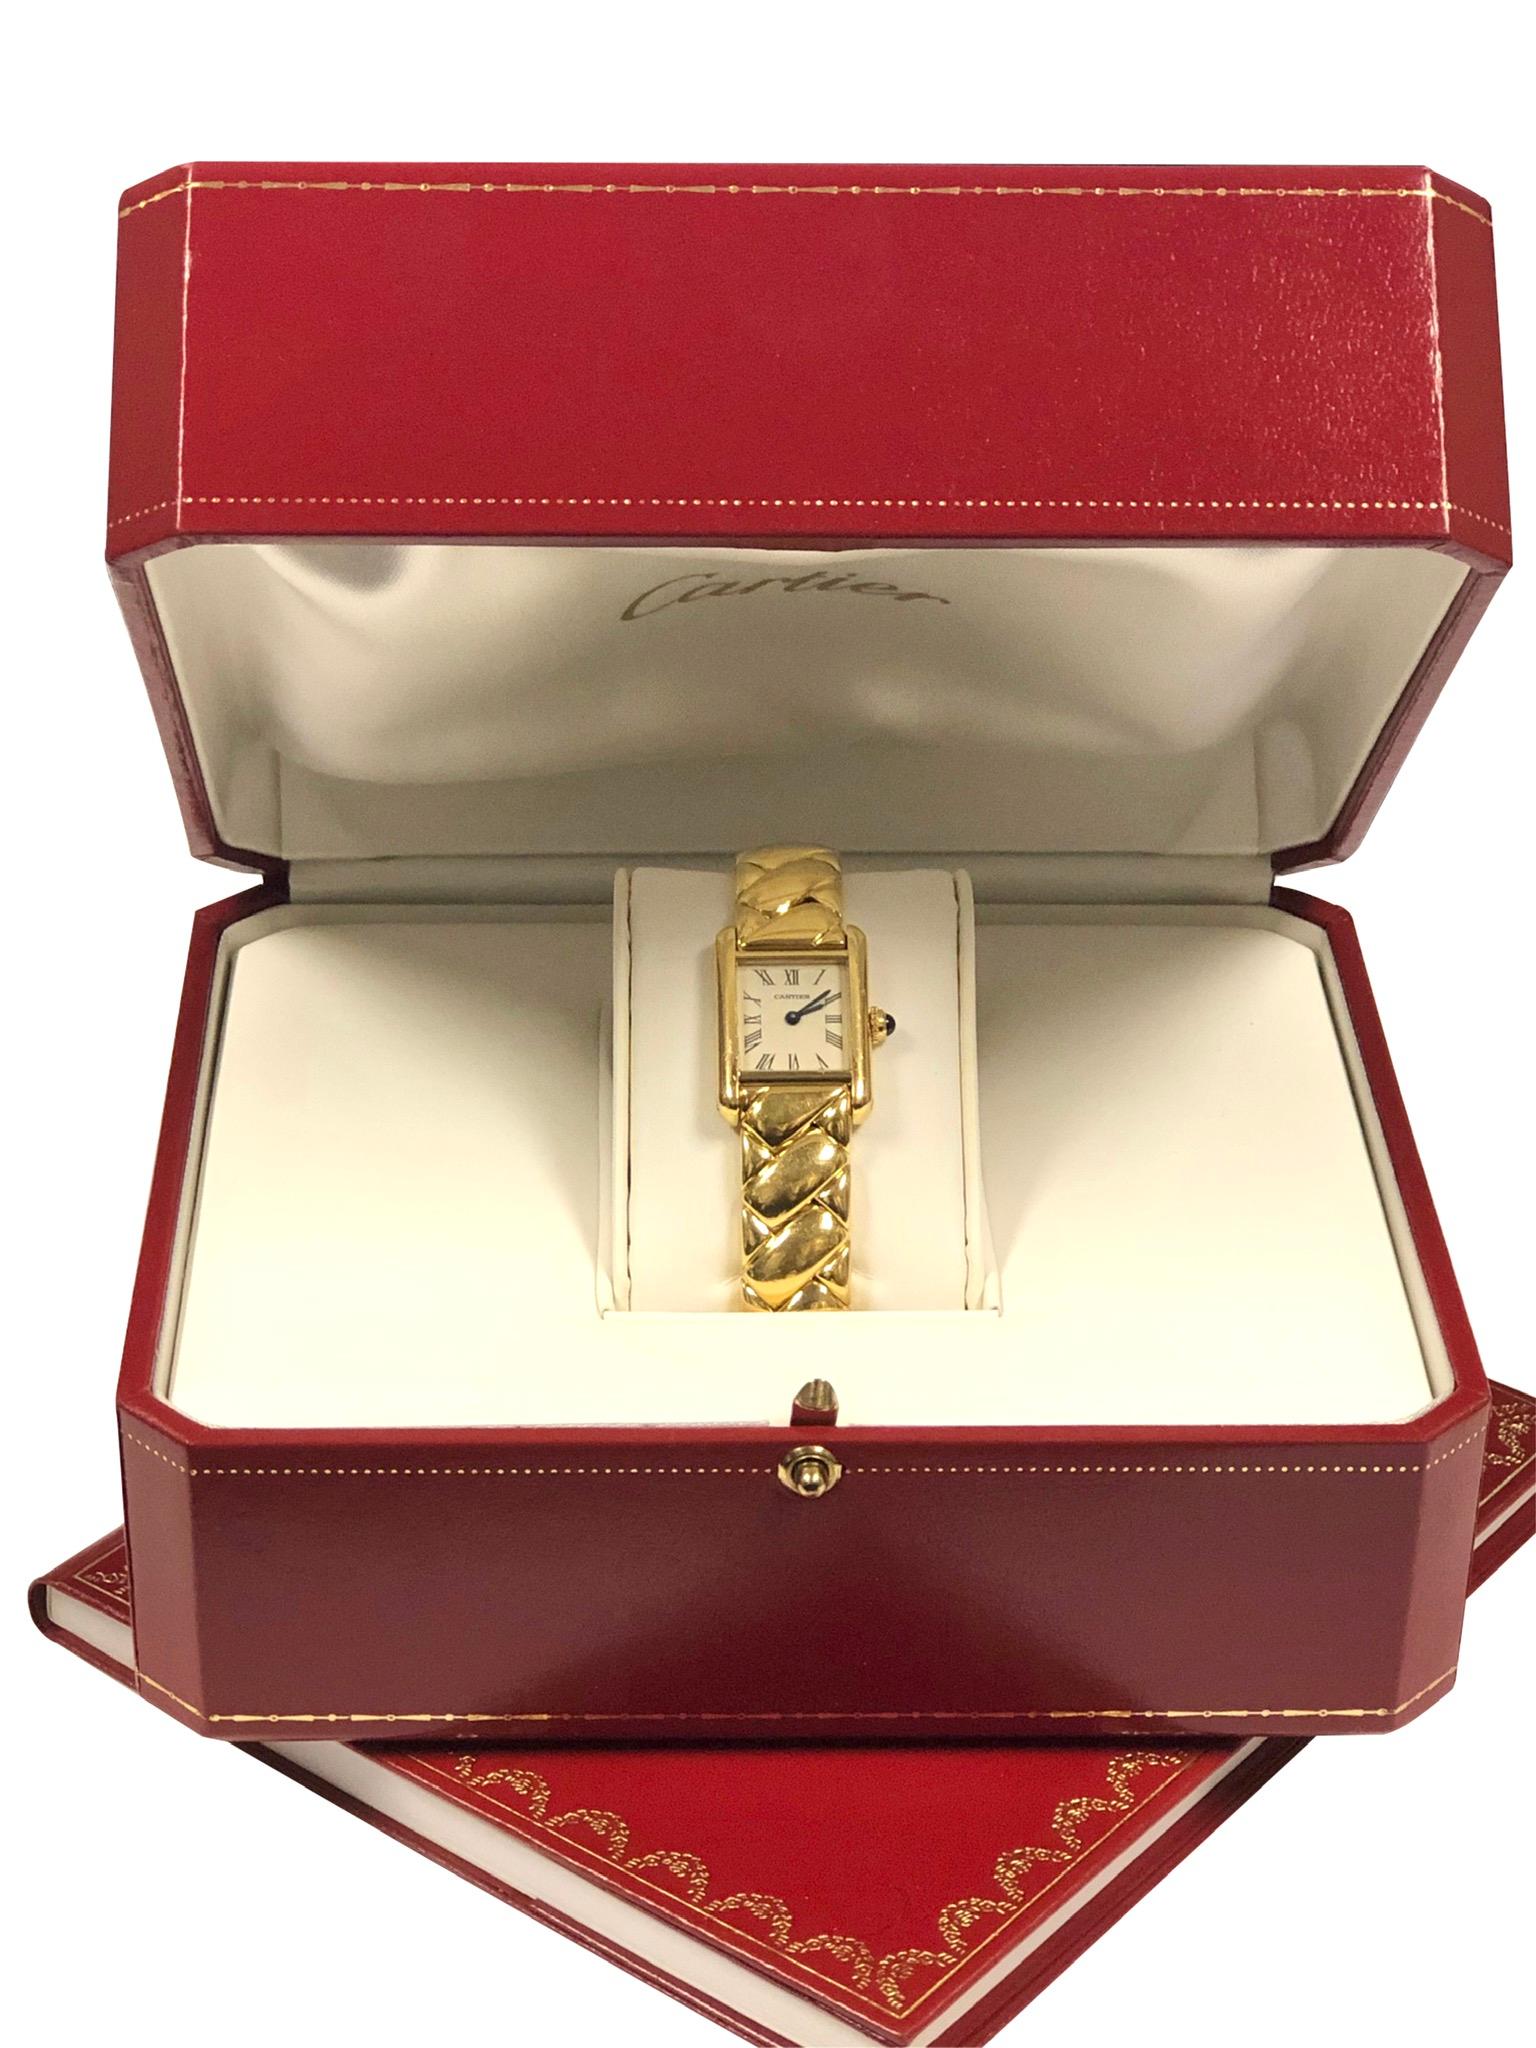 Women's Cartier Ladies Classic Tank Watch on Special Boutique Bracelet